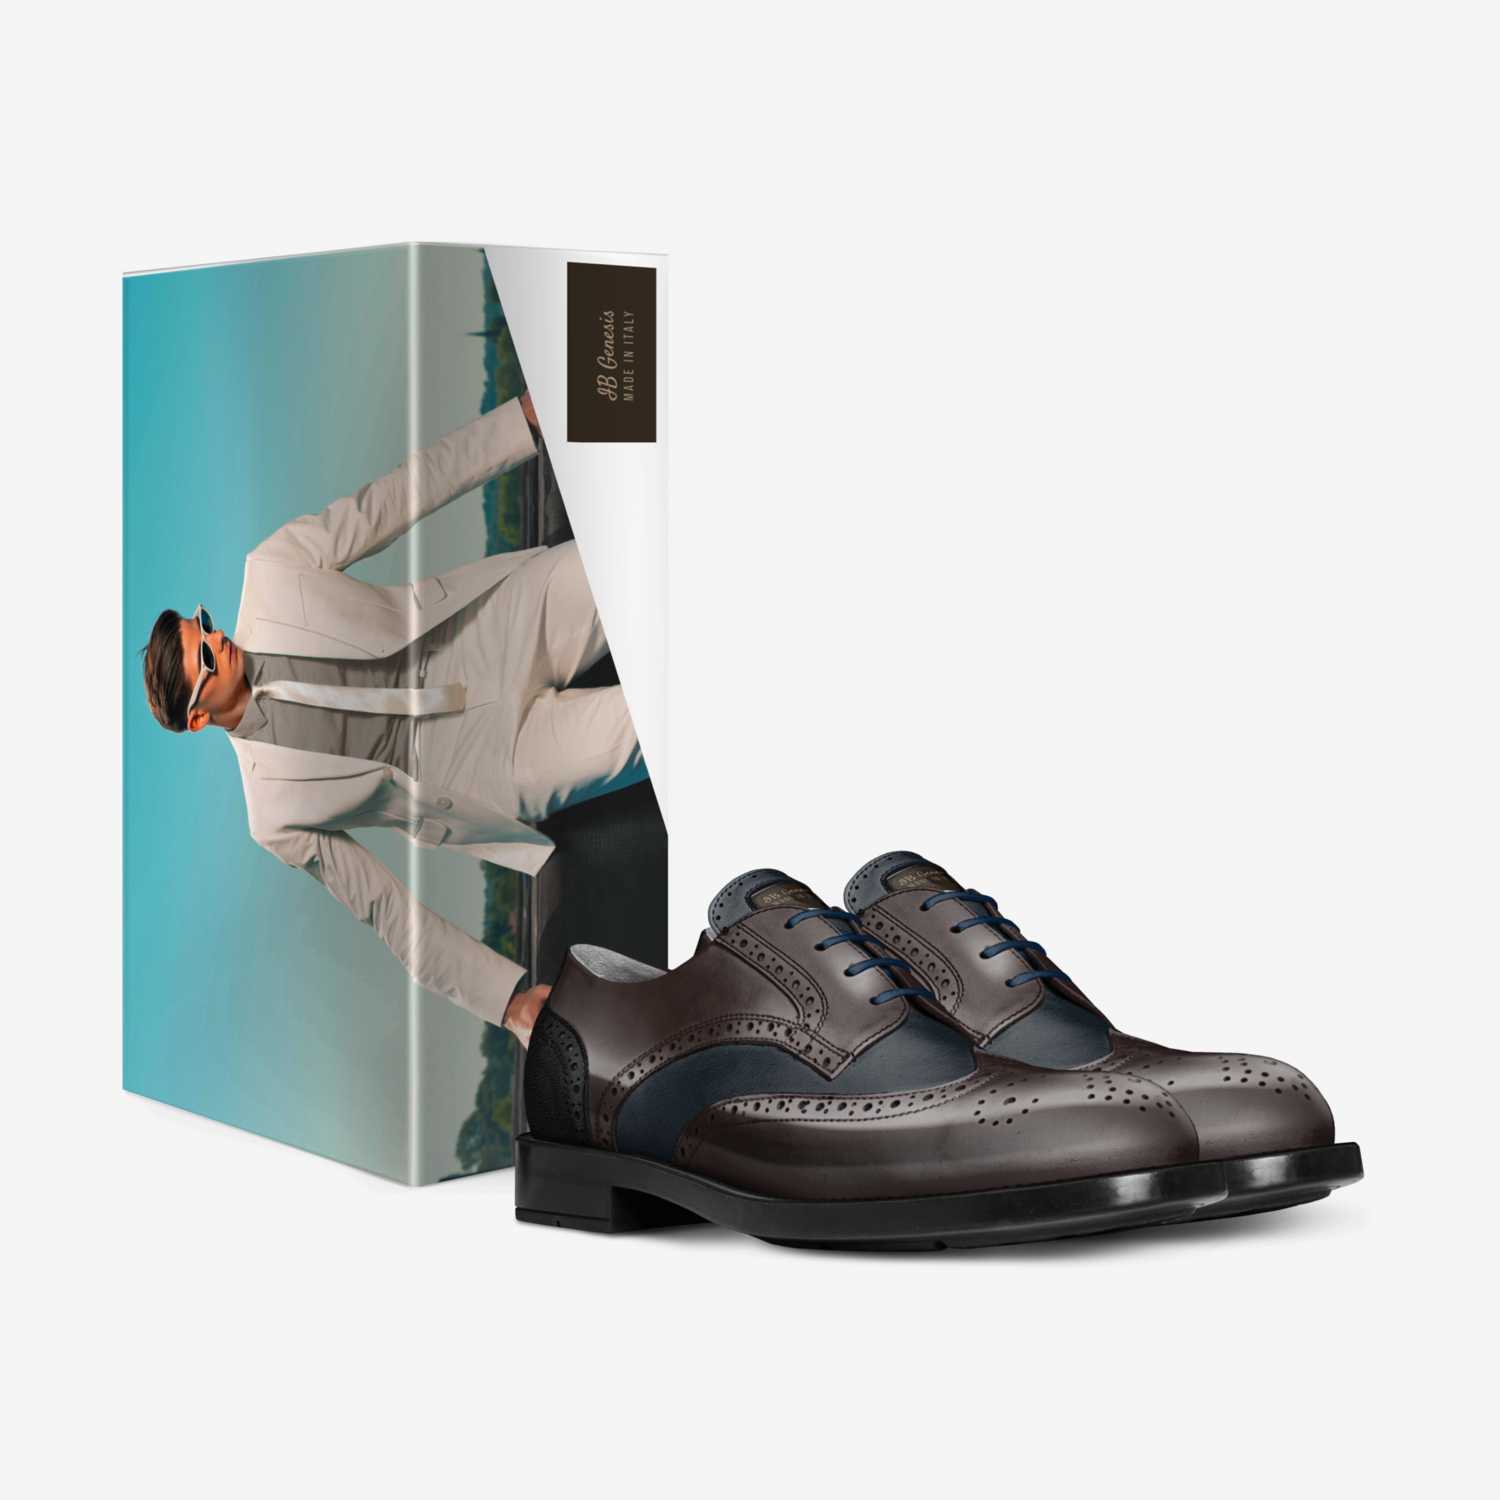 IB Genesis custom made in Italy shoes by Jigar Gangdev | Box view